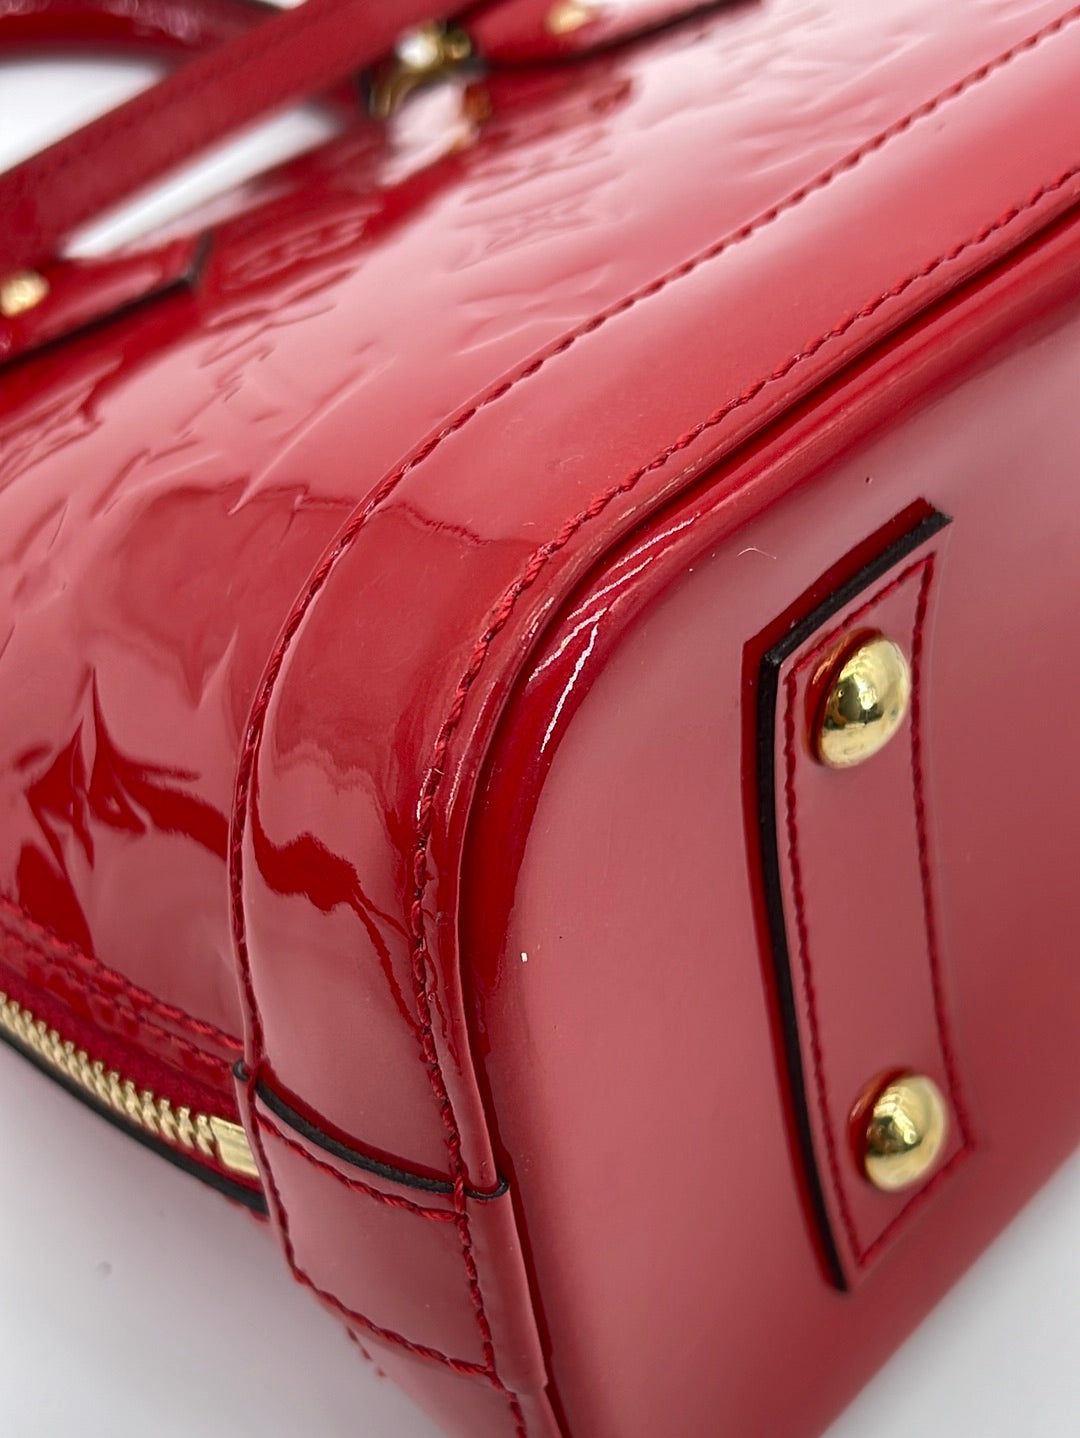 PRELOVED Louis Vuitton Red Vernis Alma BB Crossbody Bag MI3184 053123 $400 OFF